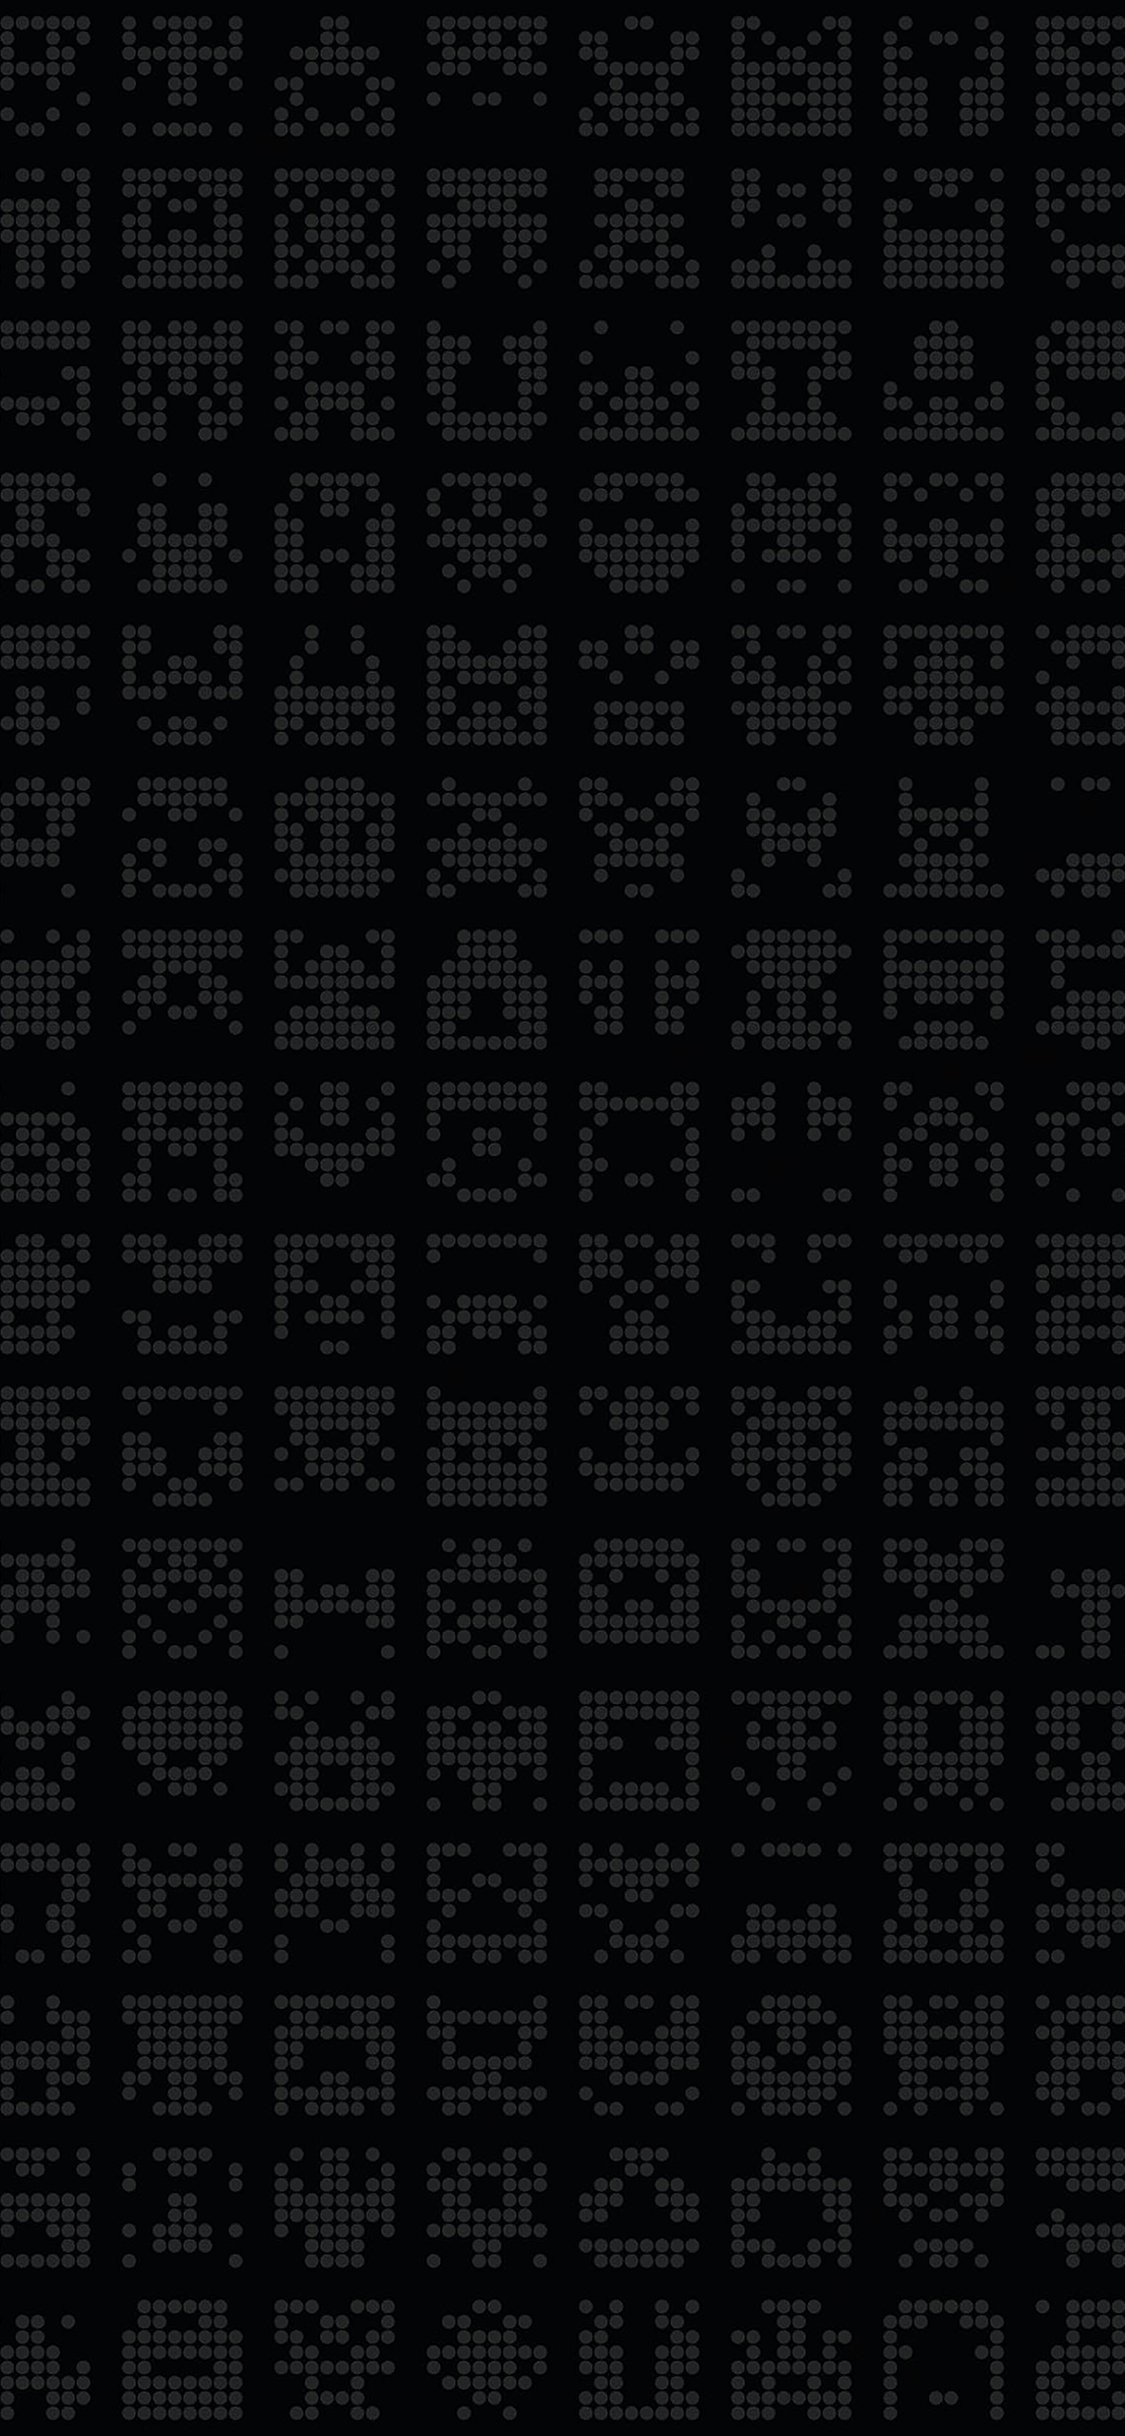 1125x2436 ... Alien symbol dark pattern iPhone X wallpaper.